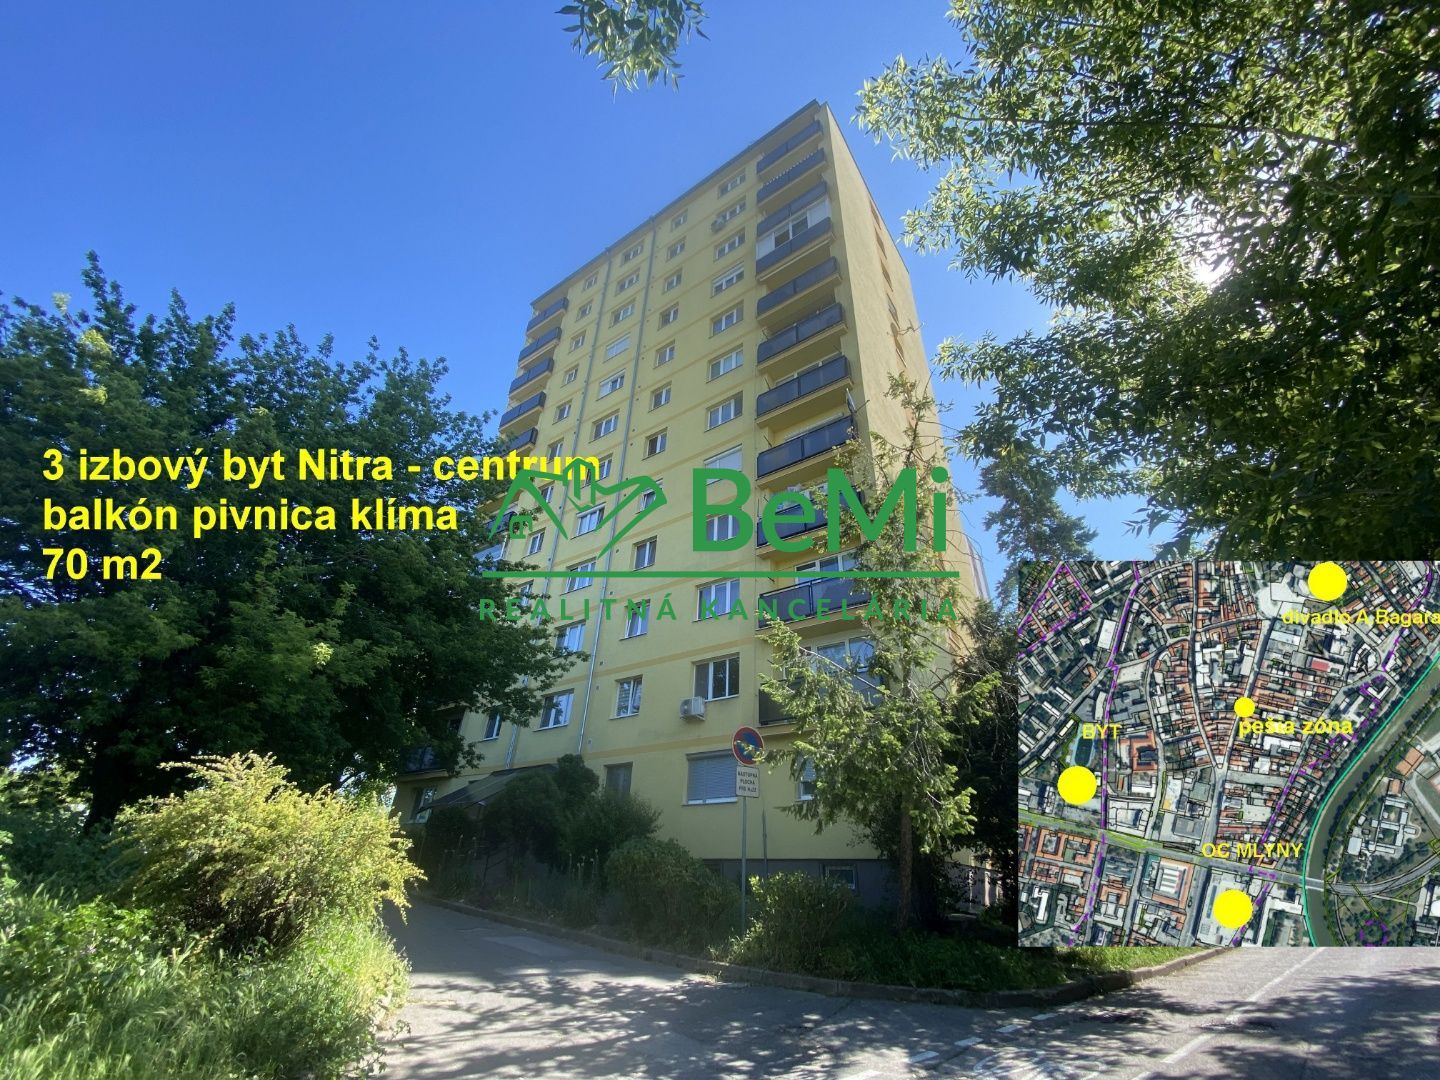 3 izbový byt 70 m2 s balkónom Nitra centrum Staré mesto ID 483-113-MIG